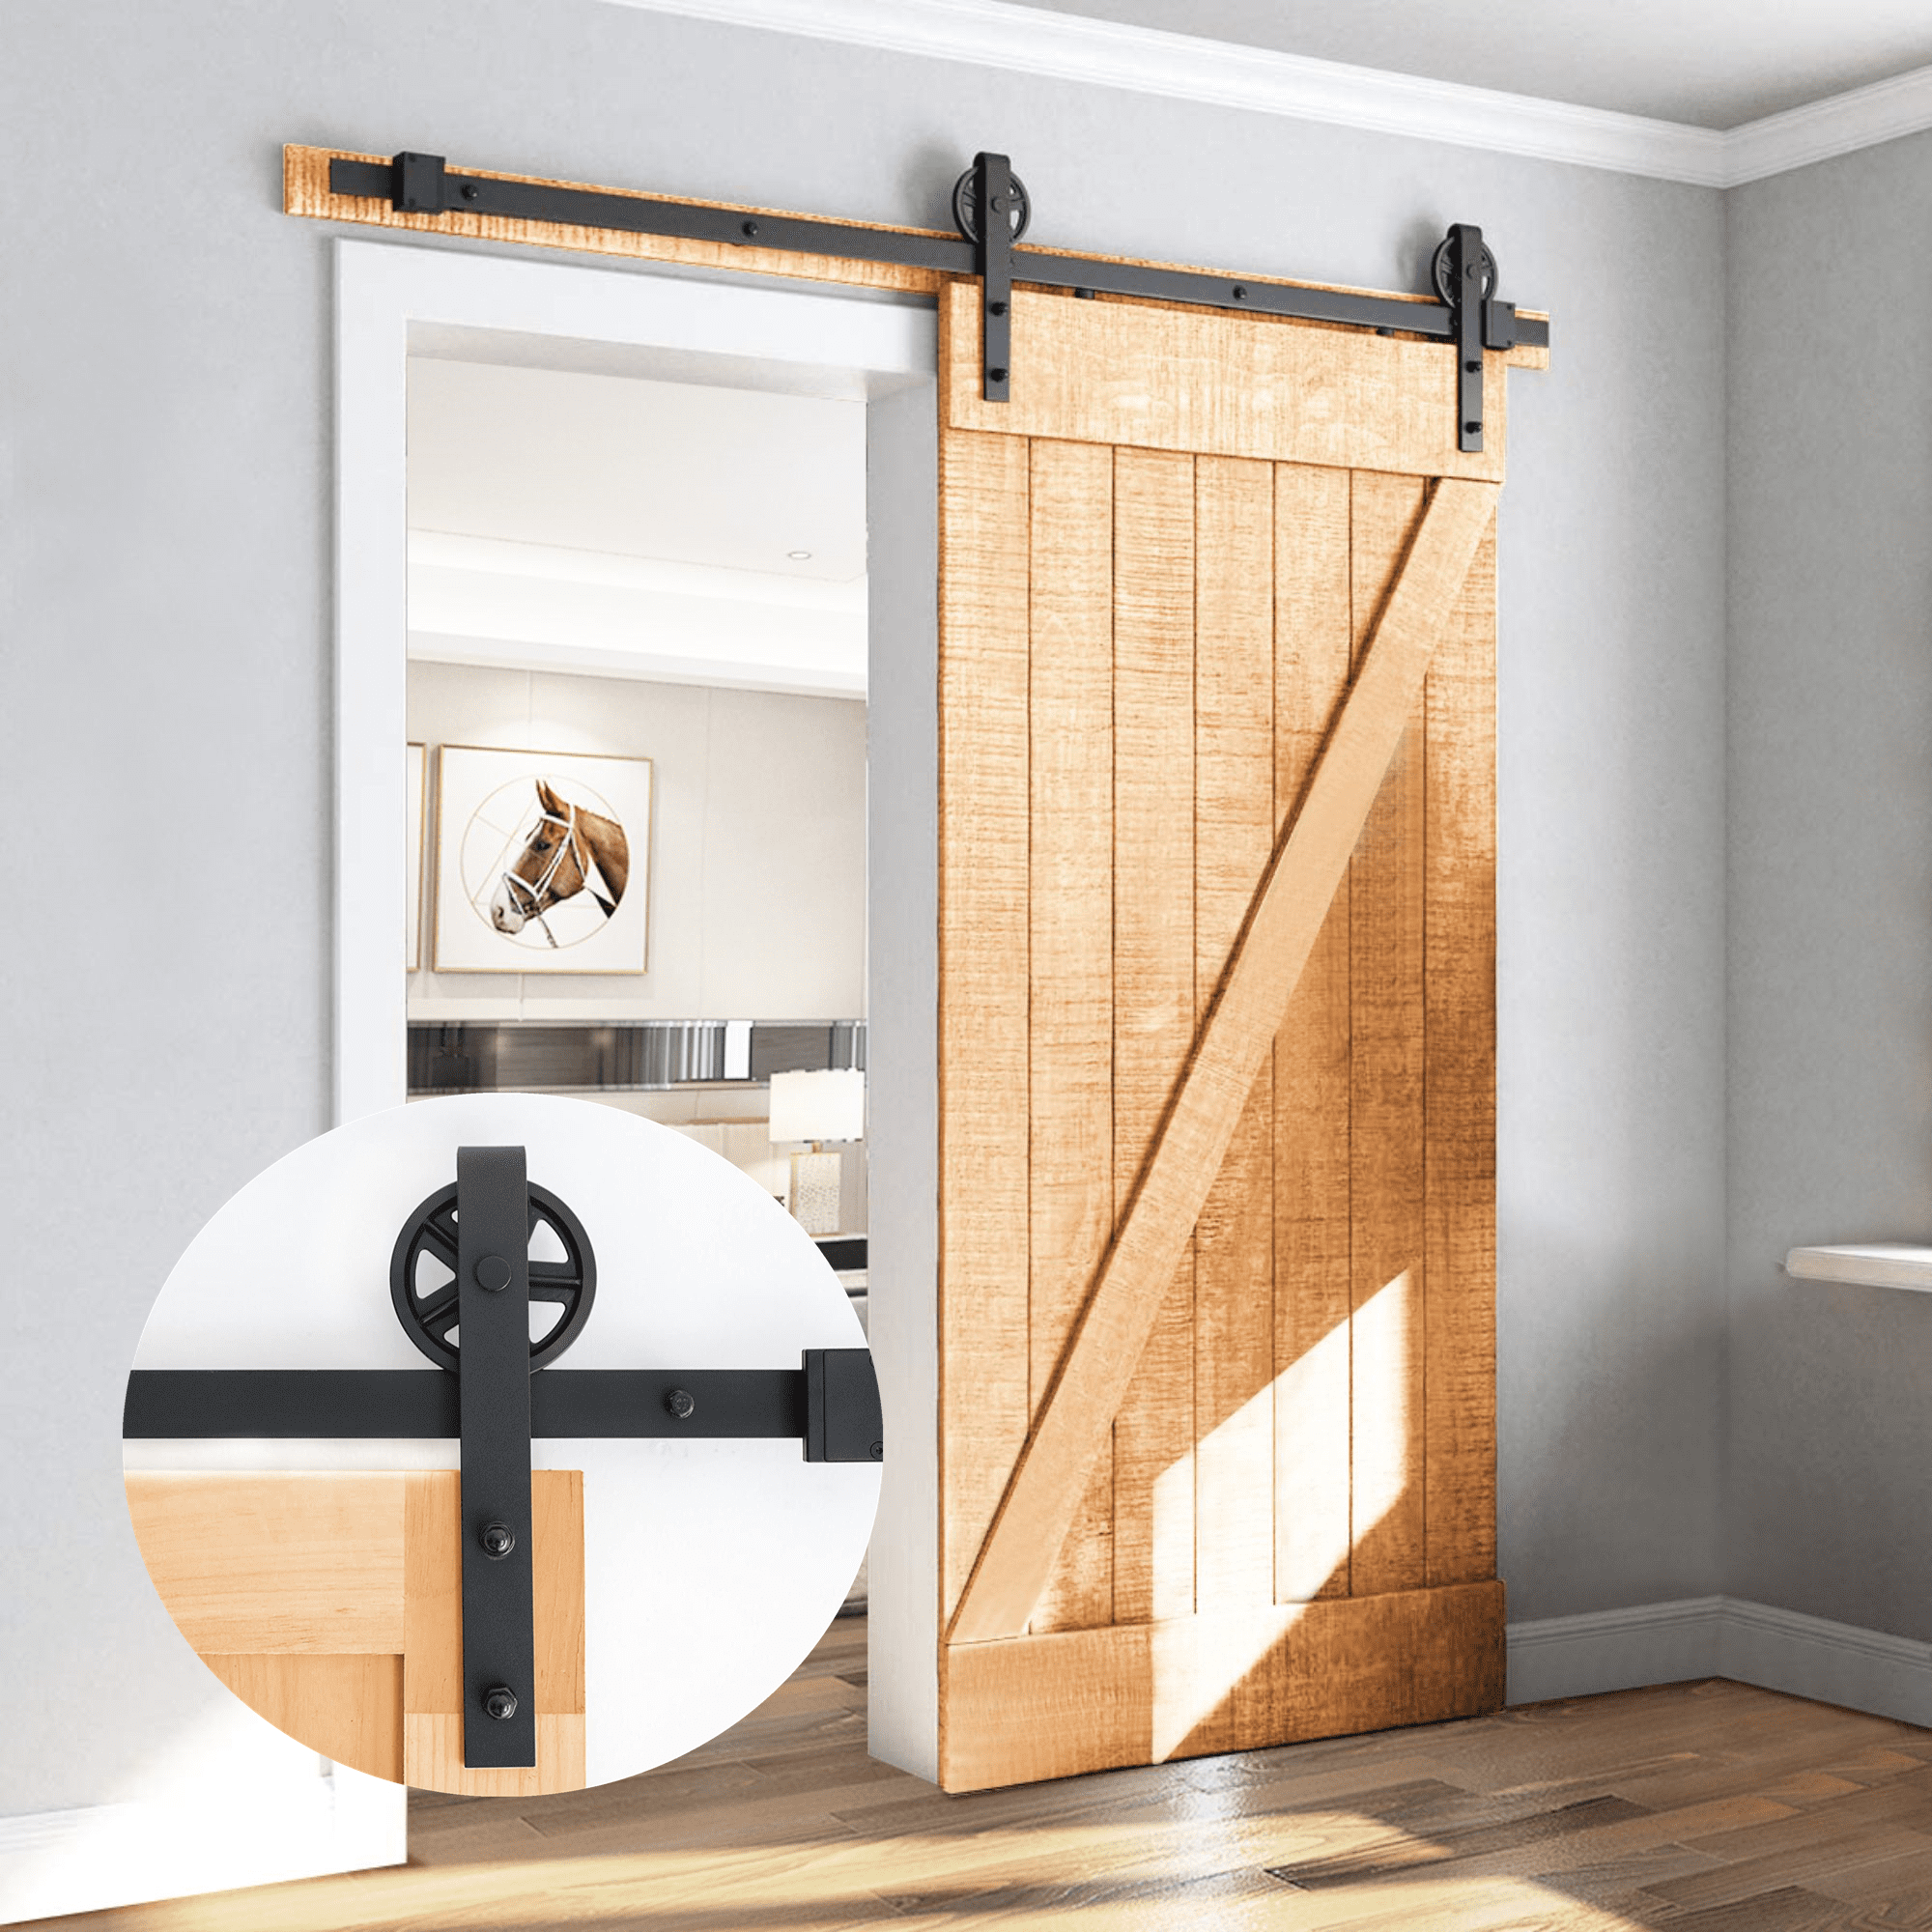 4ft-20ft Big Strap Spoke Wheel Sliding Wood Barn Door Hardware For One/Two Doors 